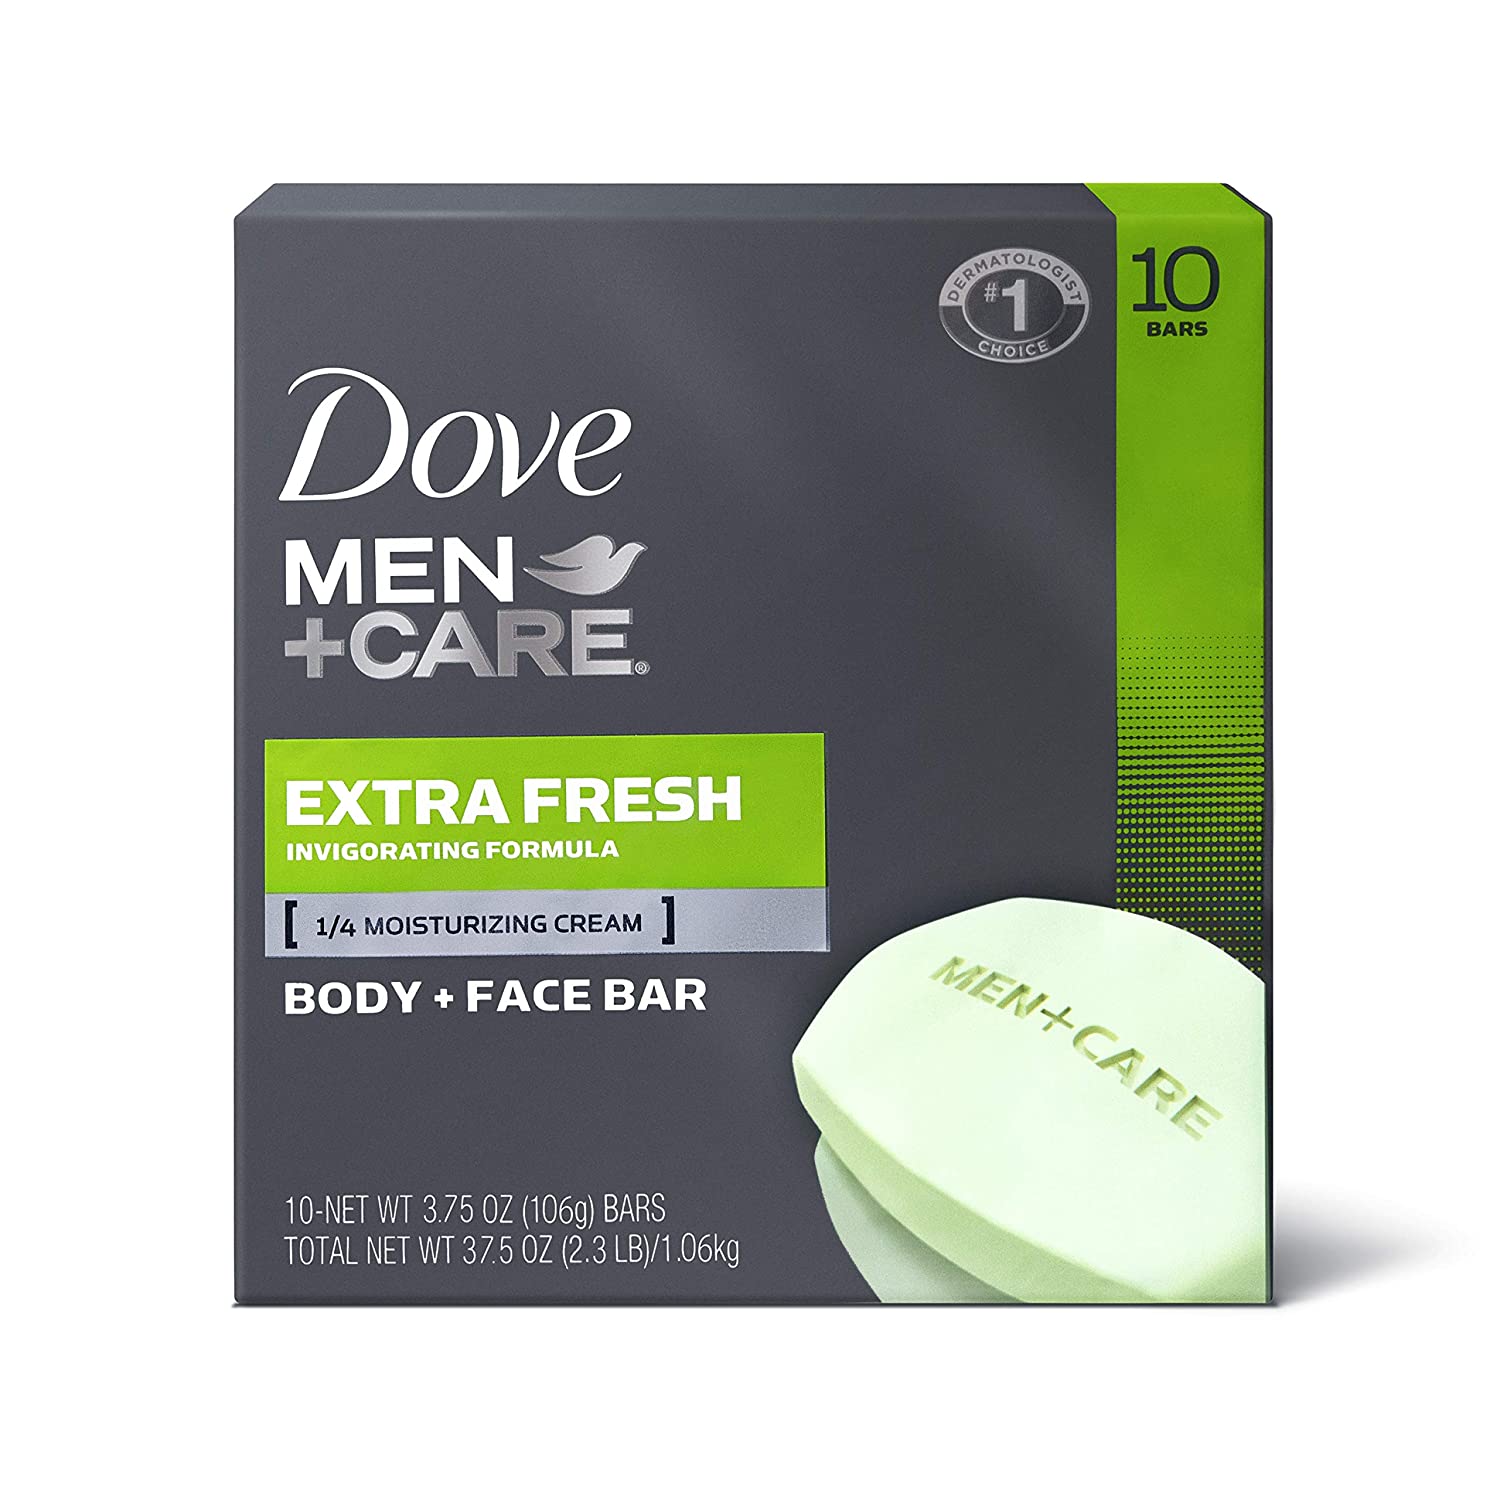 Dove Men+Care 3 in 1 Body + Face Bar with Moisturising Cream- Pack of 10 Bars - 37.5Oz (1Kg)